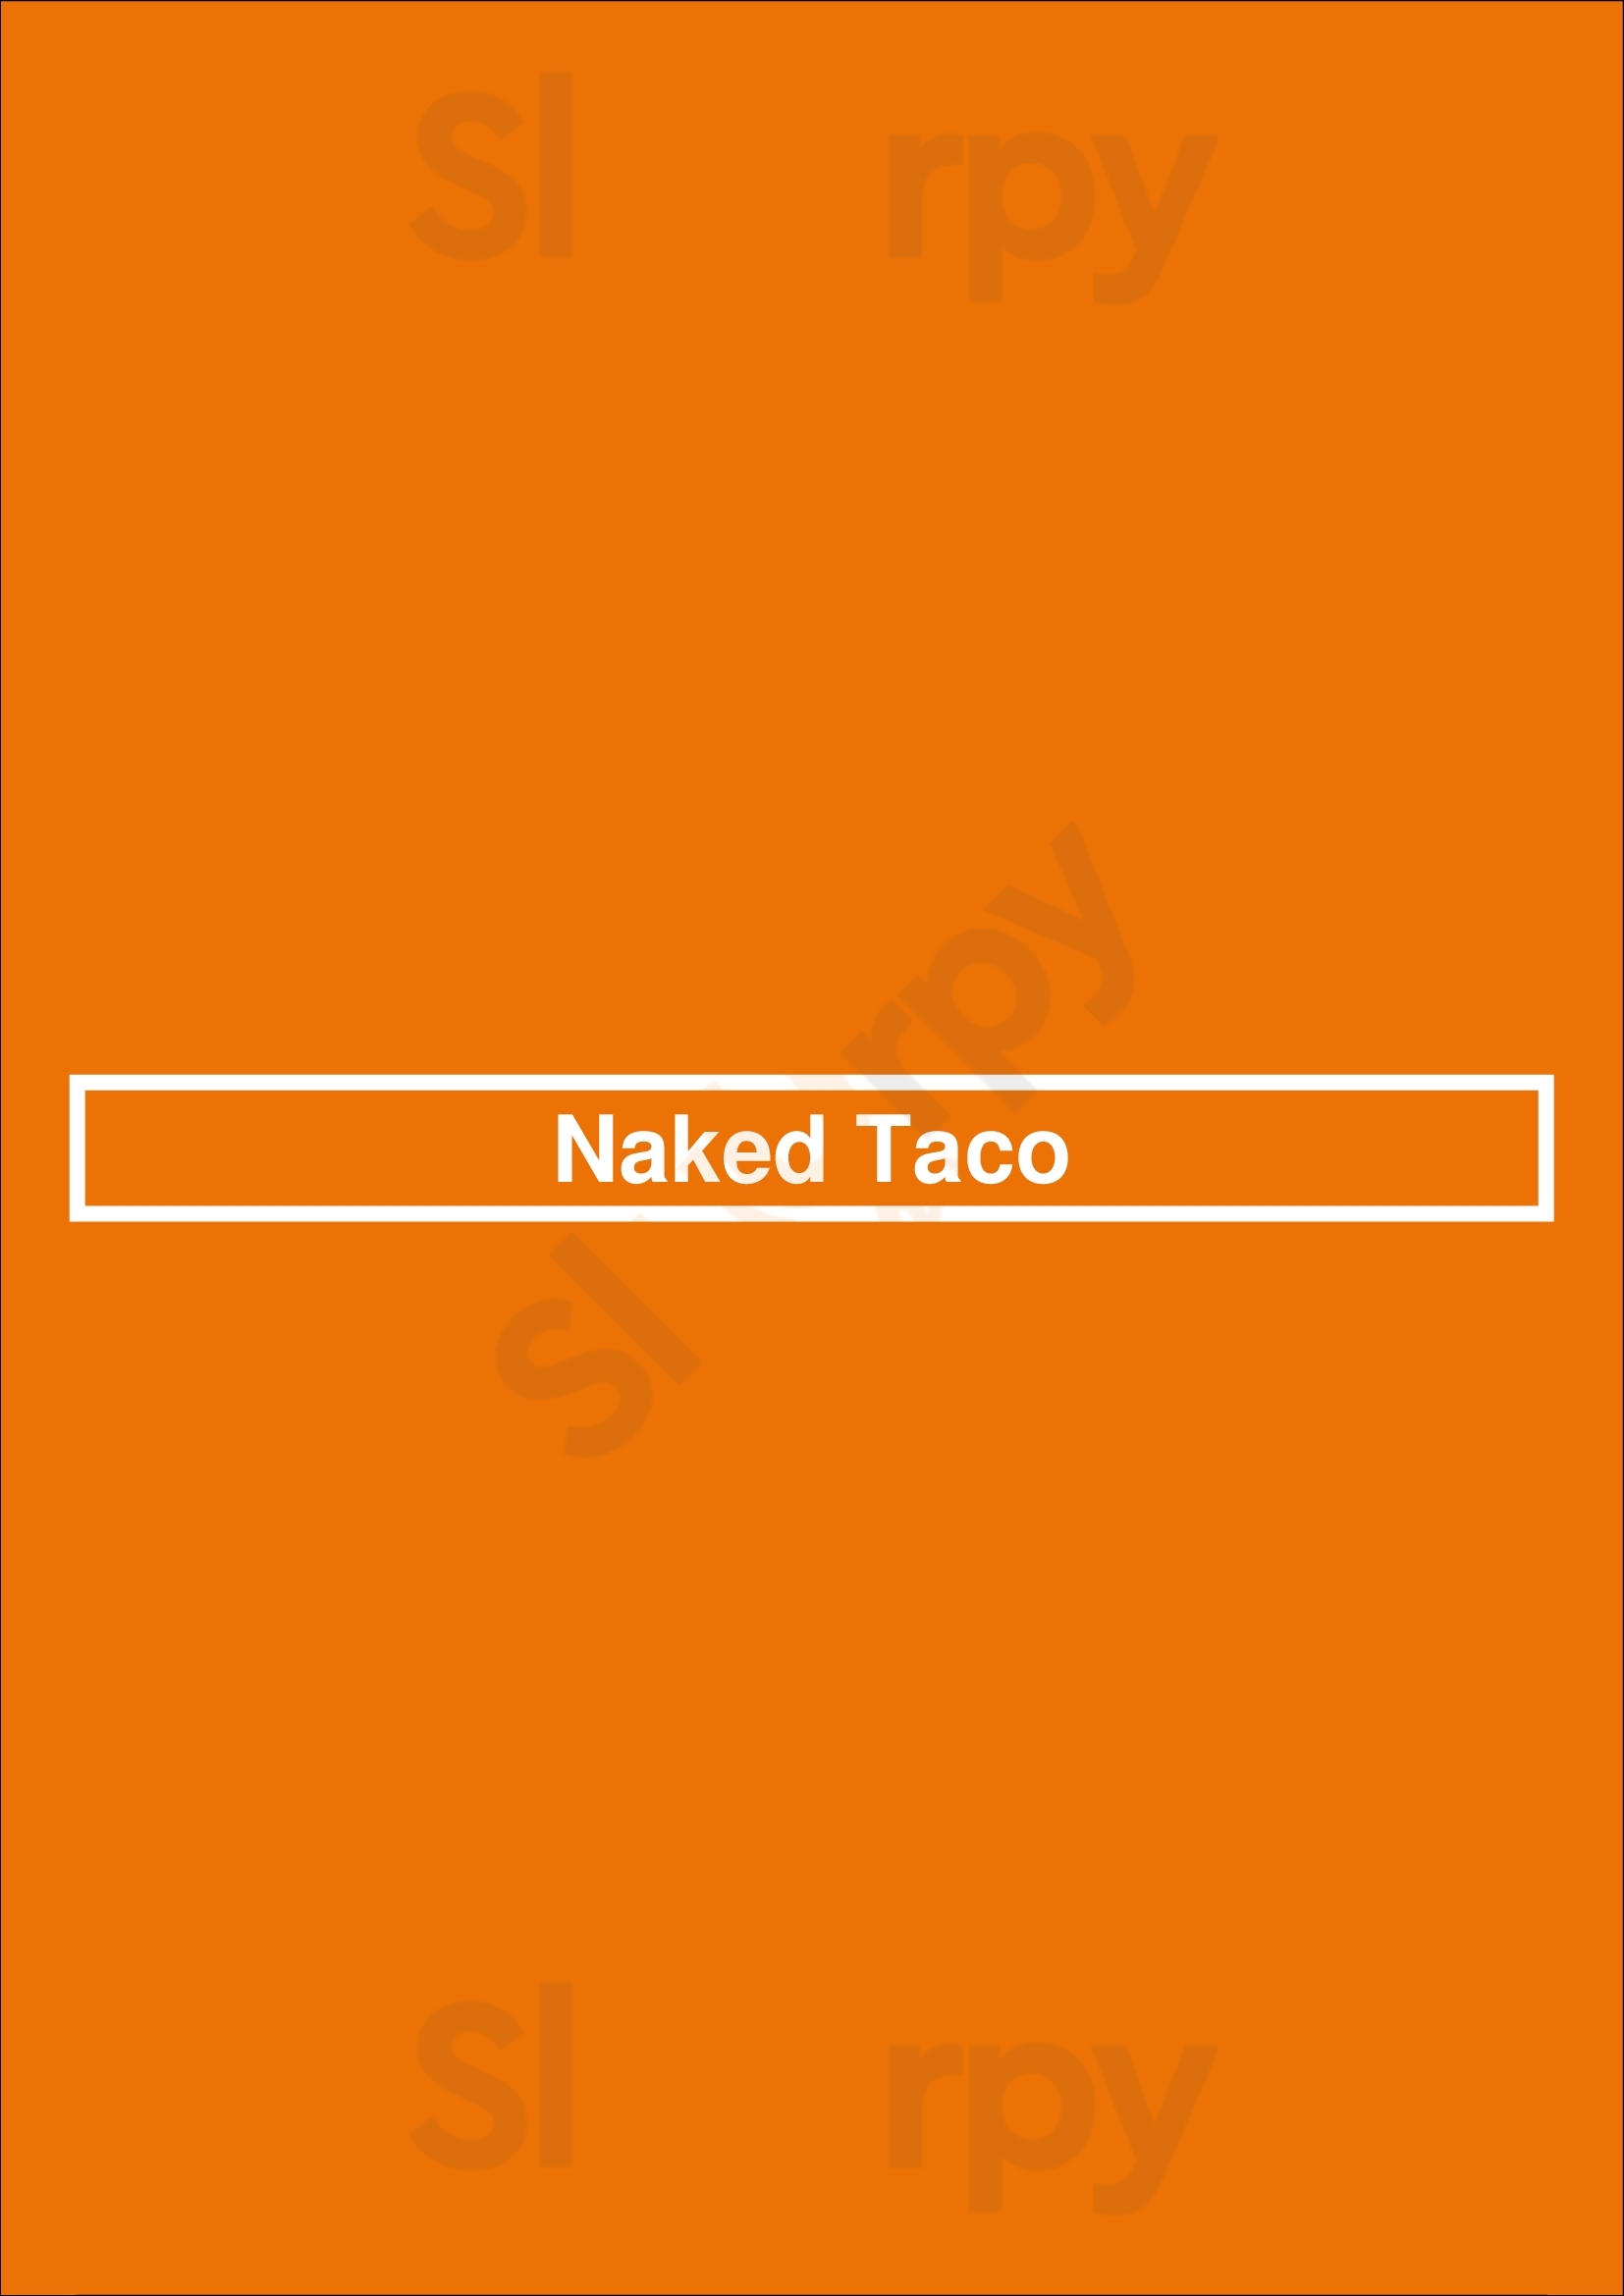 Naked Taco Miami Beach Menu - 1